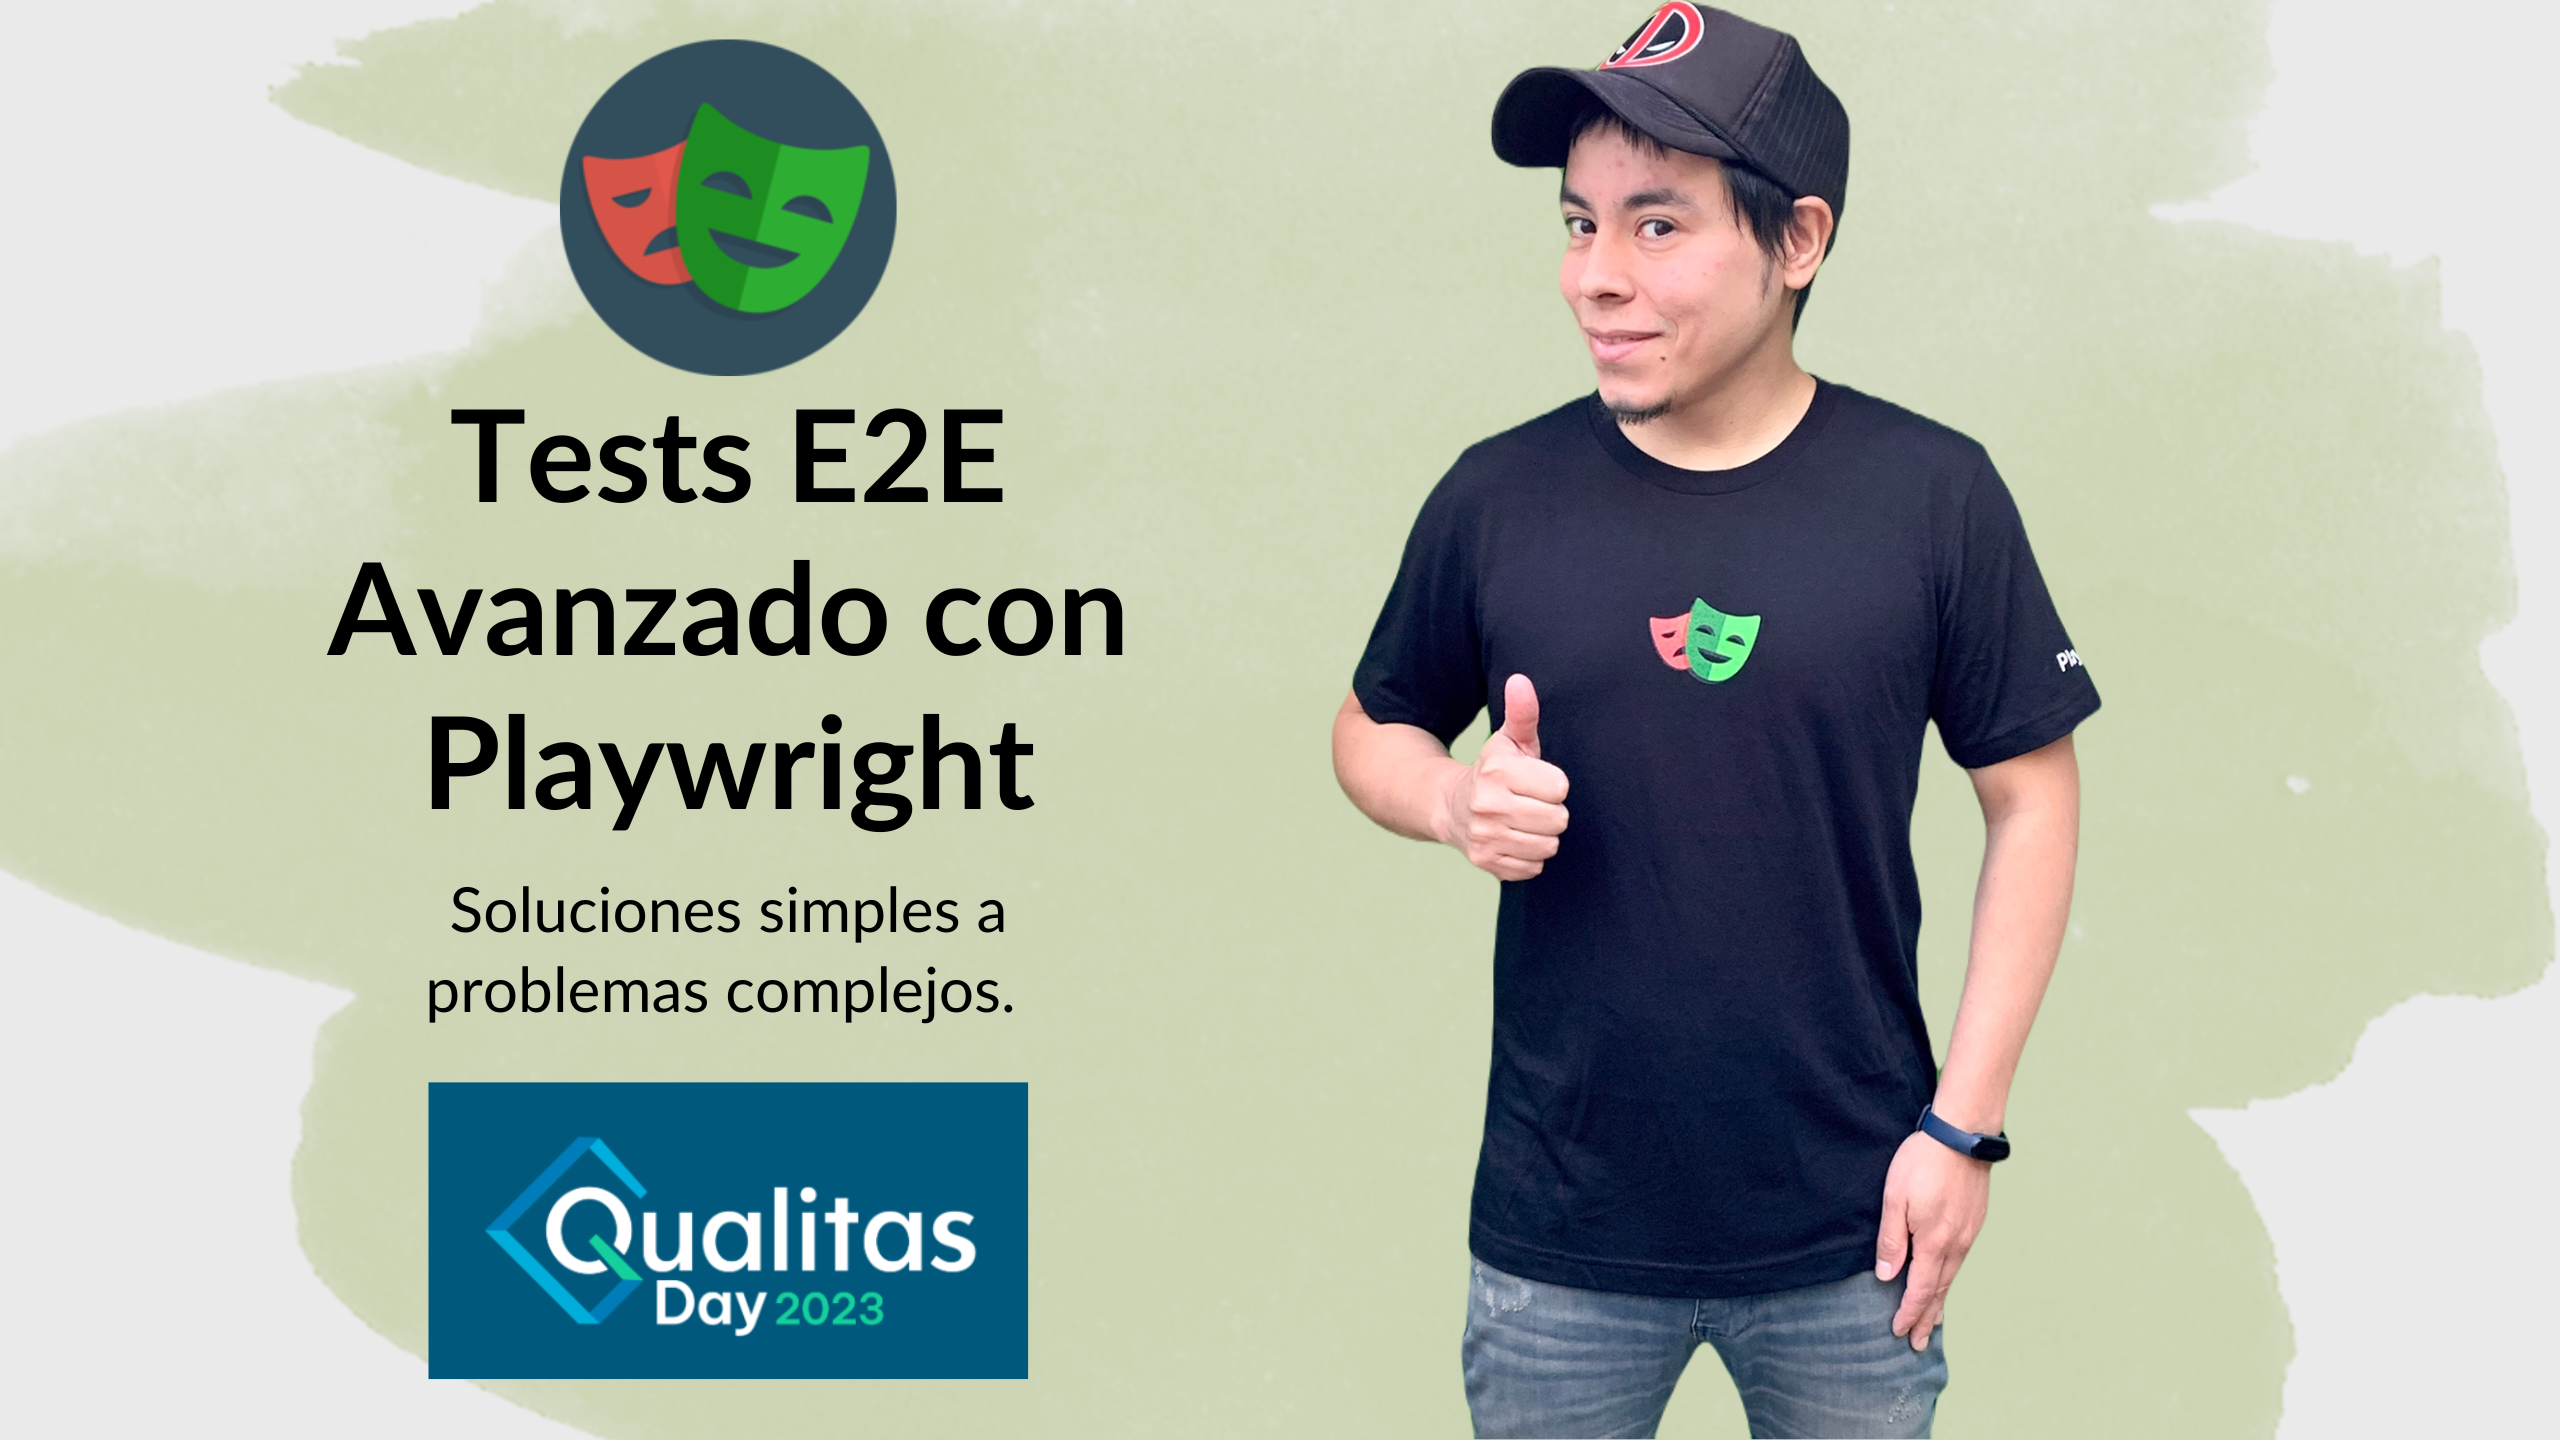 Qualitas Day 2023: Advanced E2E testing with Playwright [Spanish]